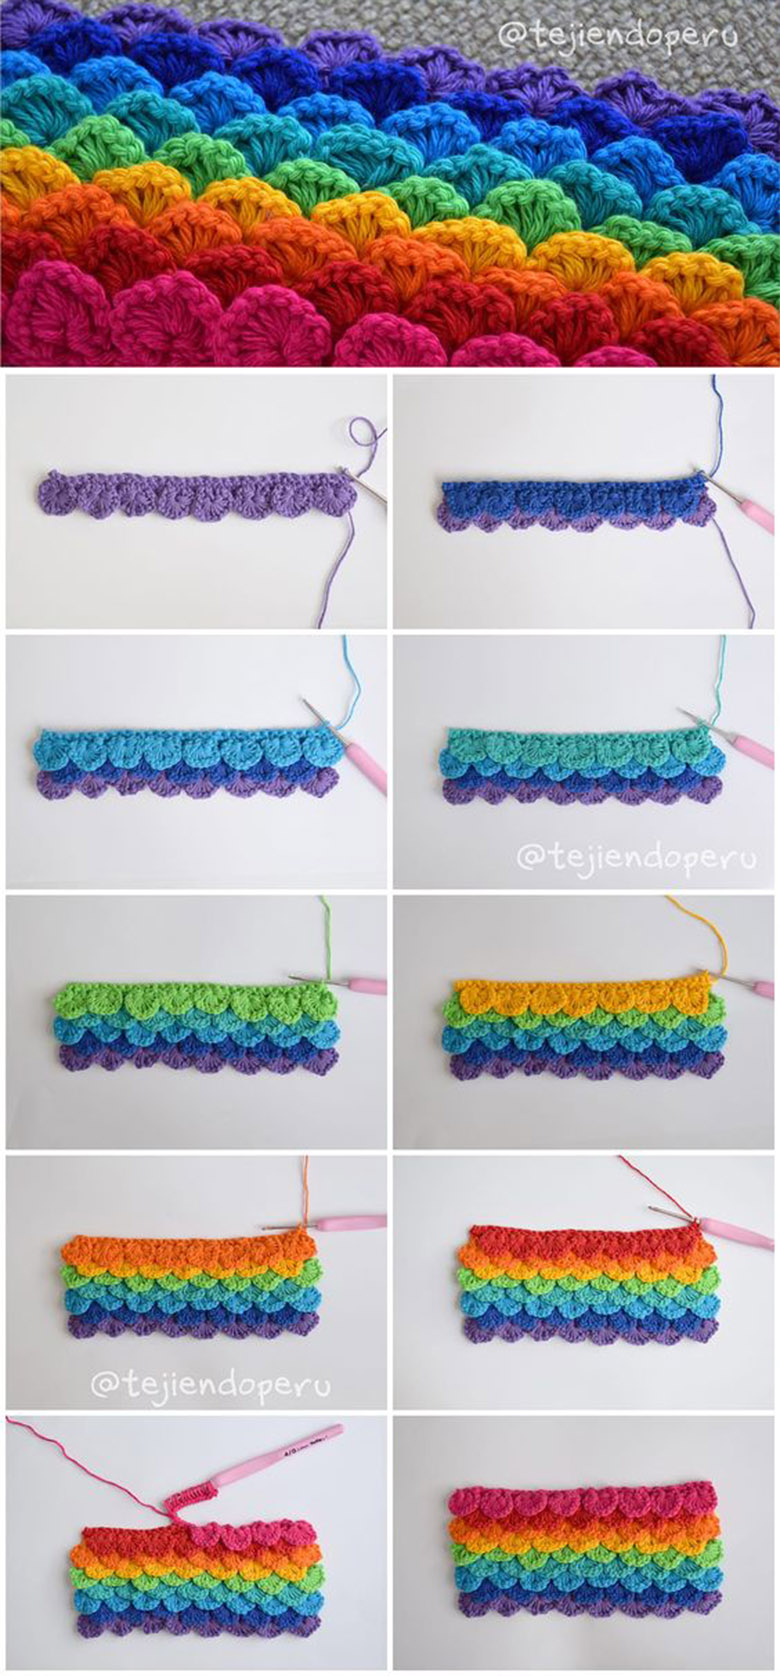 Crochet Crocodile Stitch Image